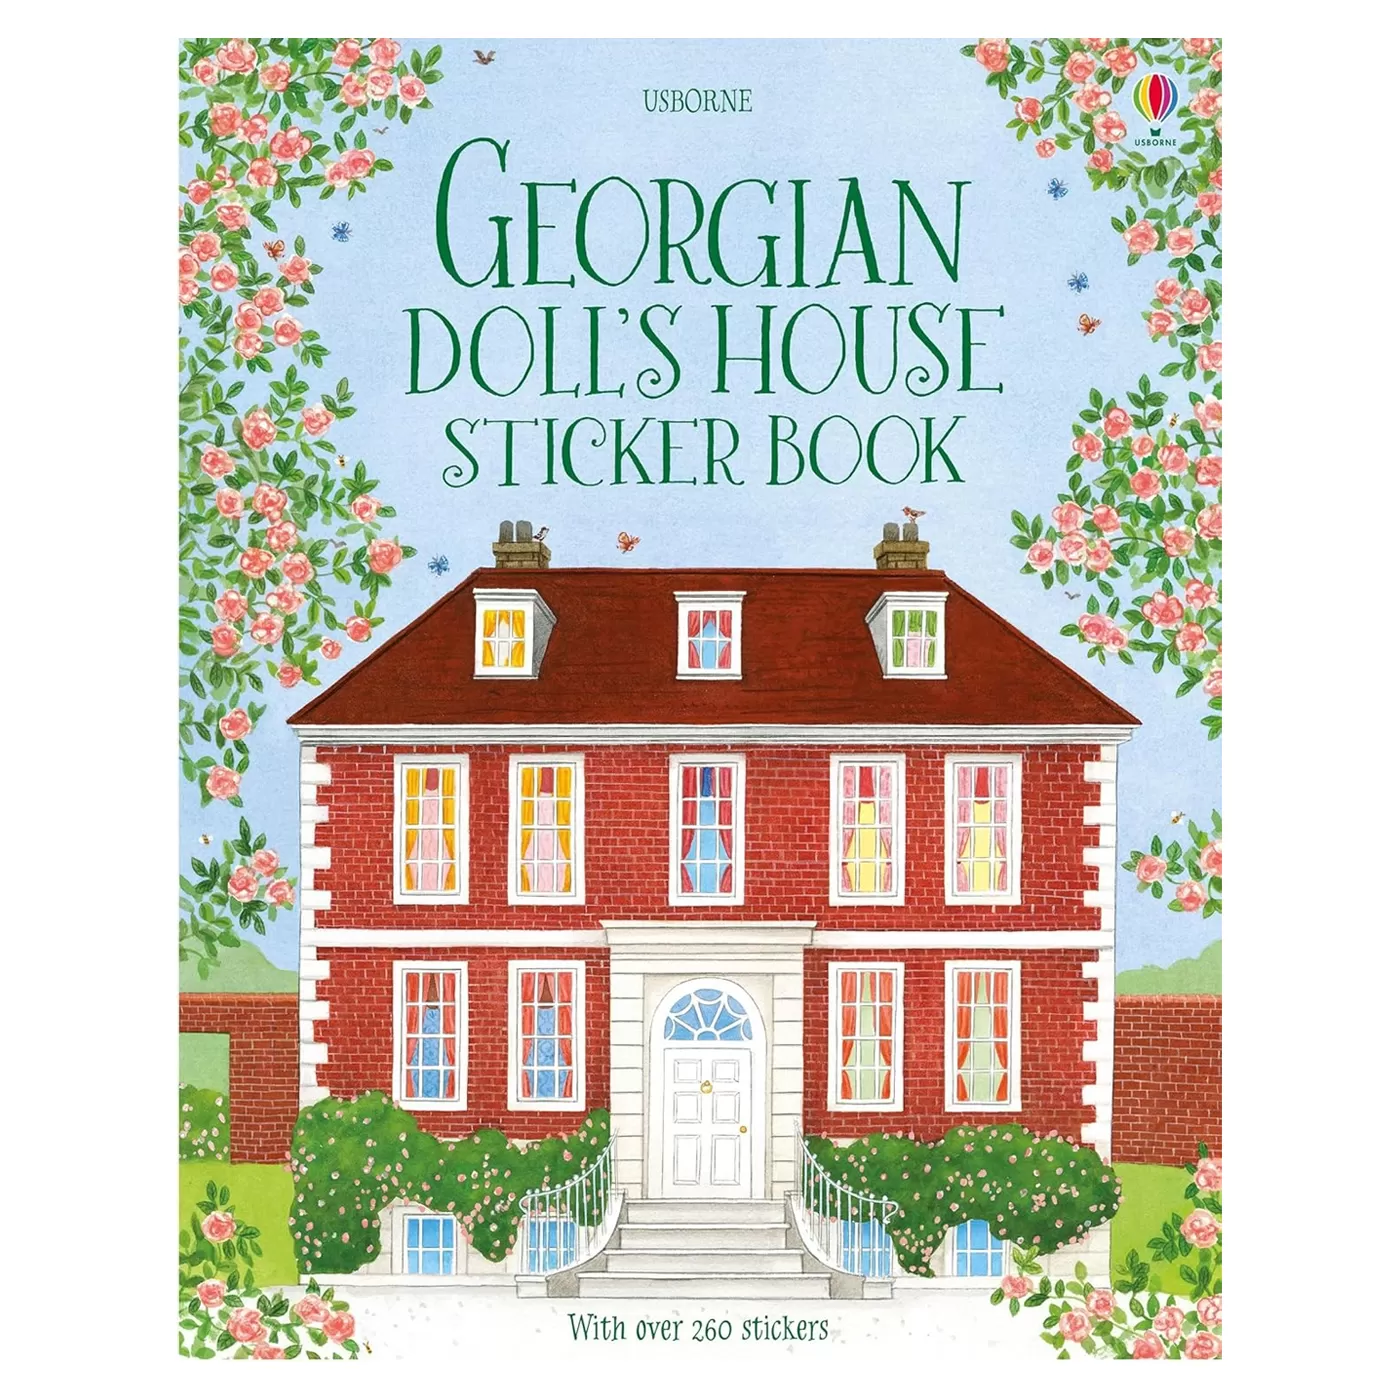 USBORNE Georgian Doll's House Sticker Book